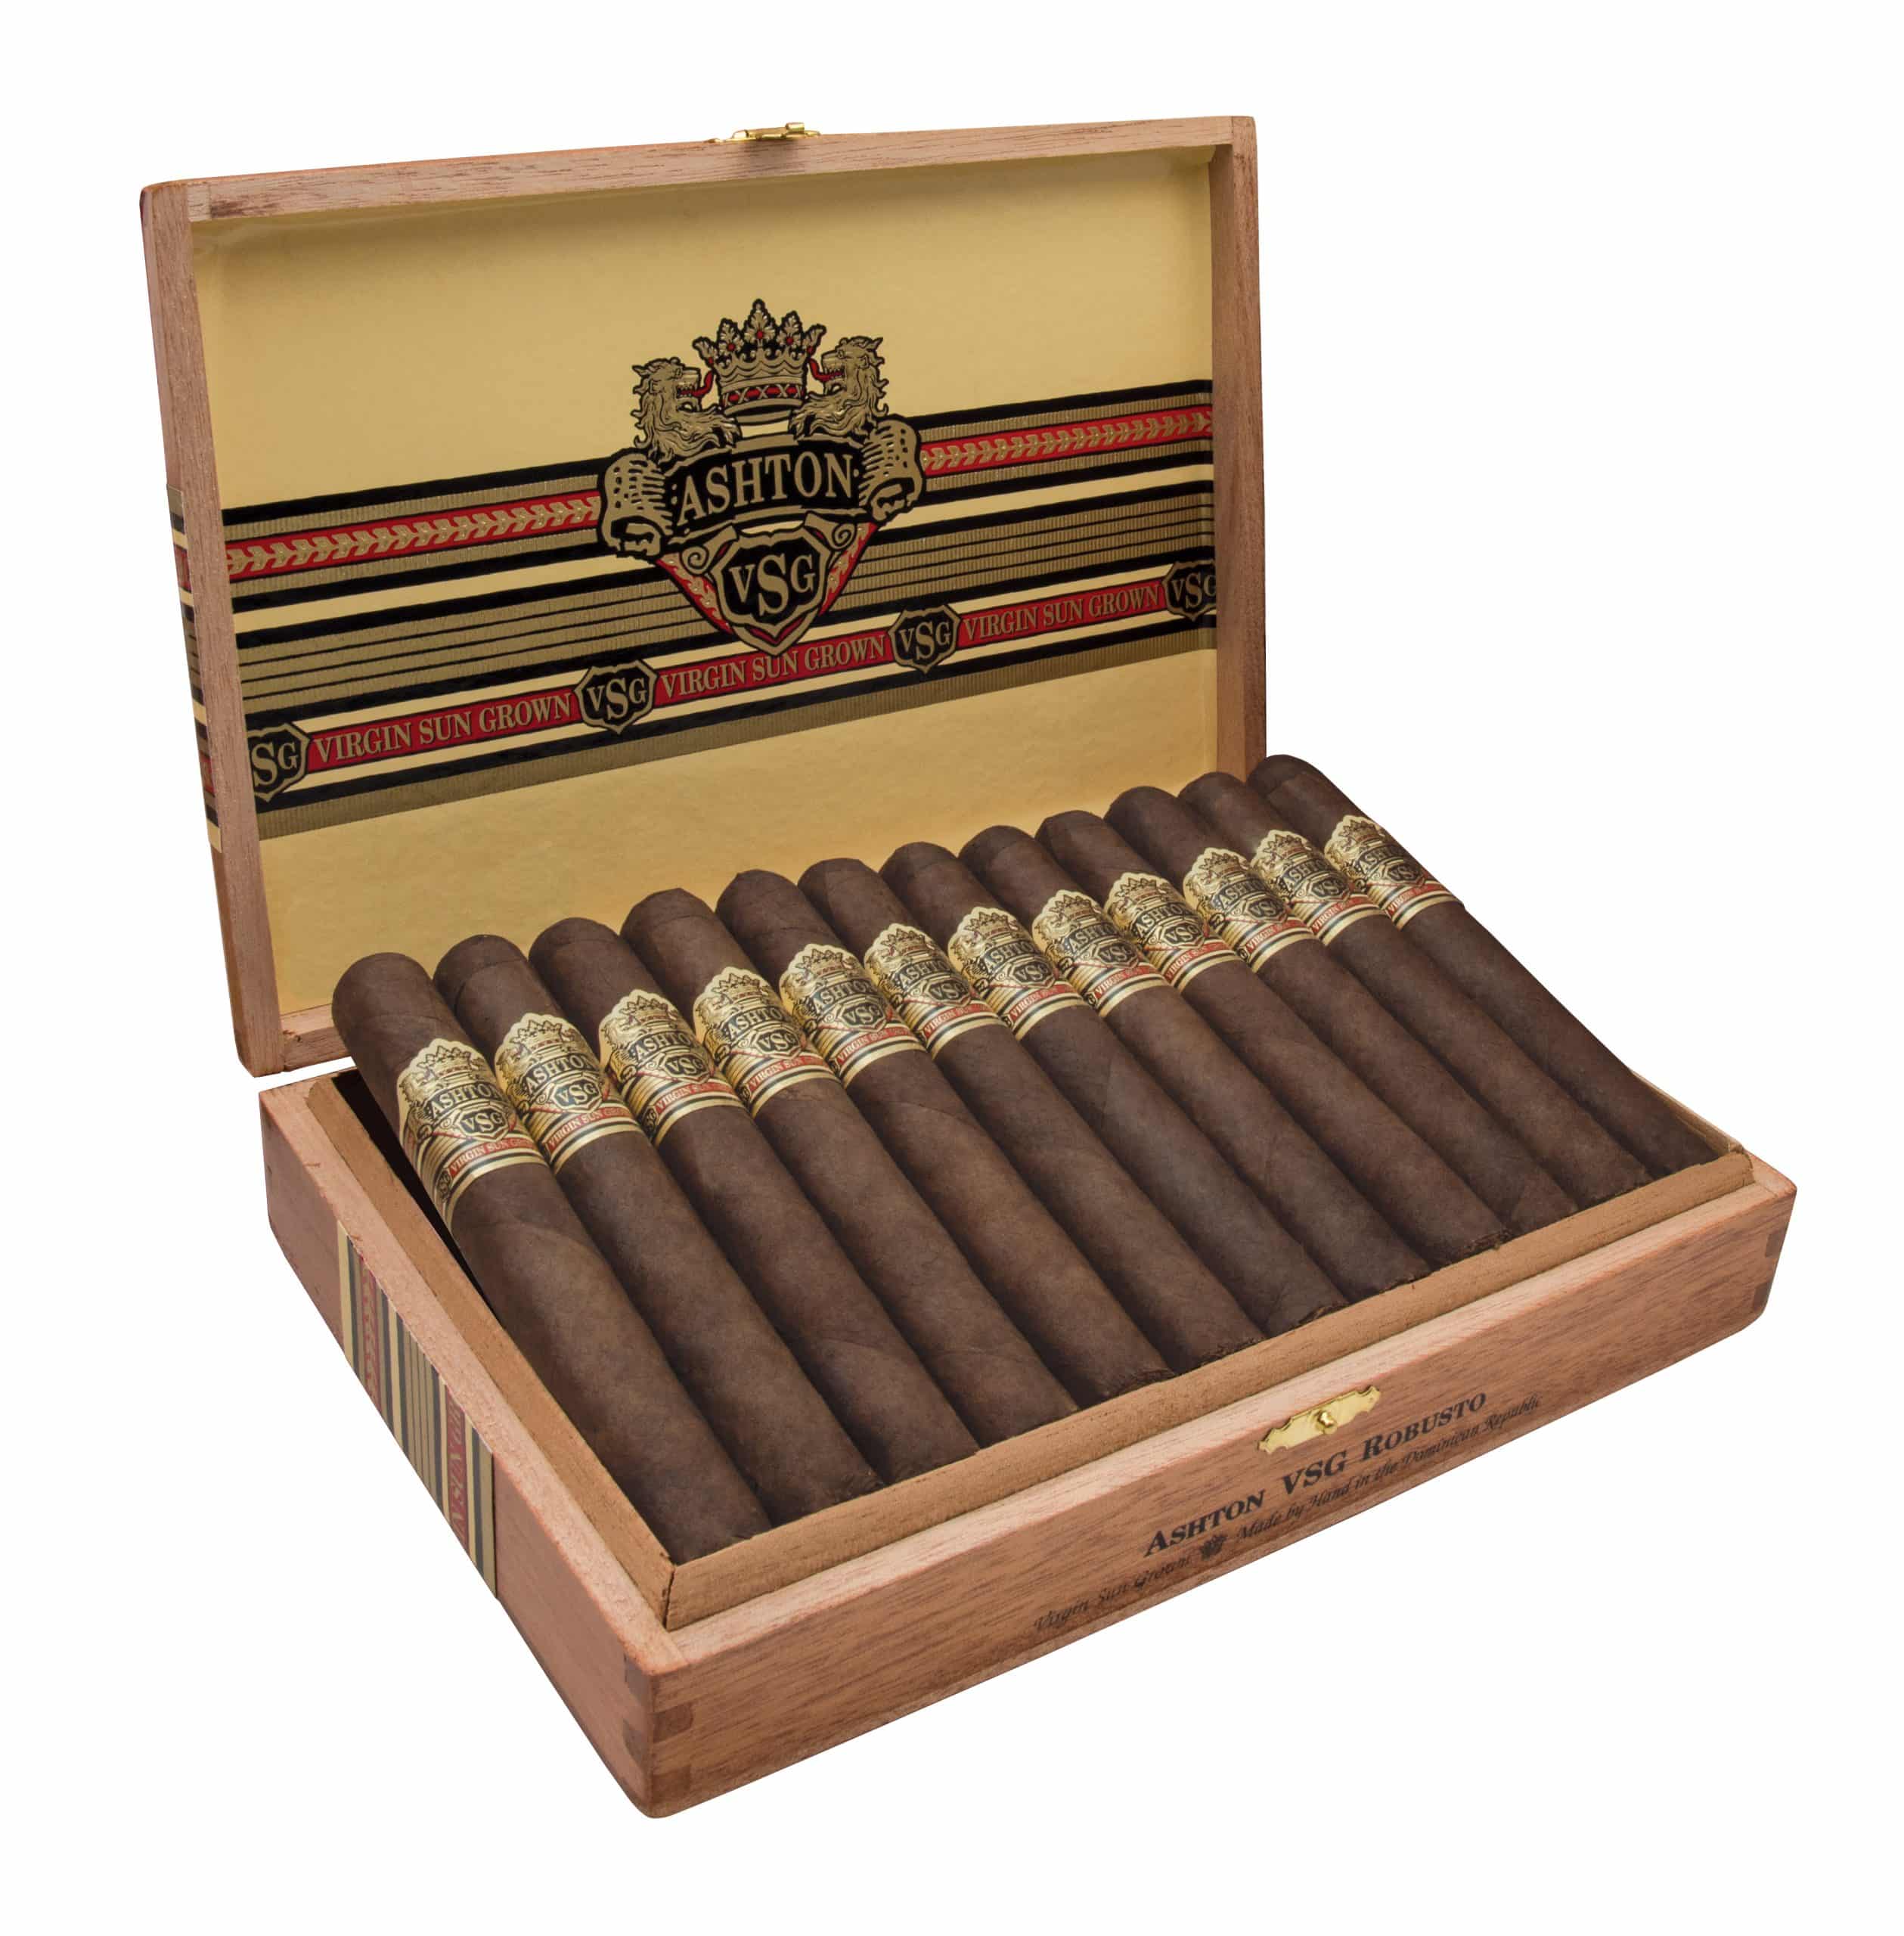 Open box of 12 count Ashton VSG Robusto cigars